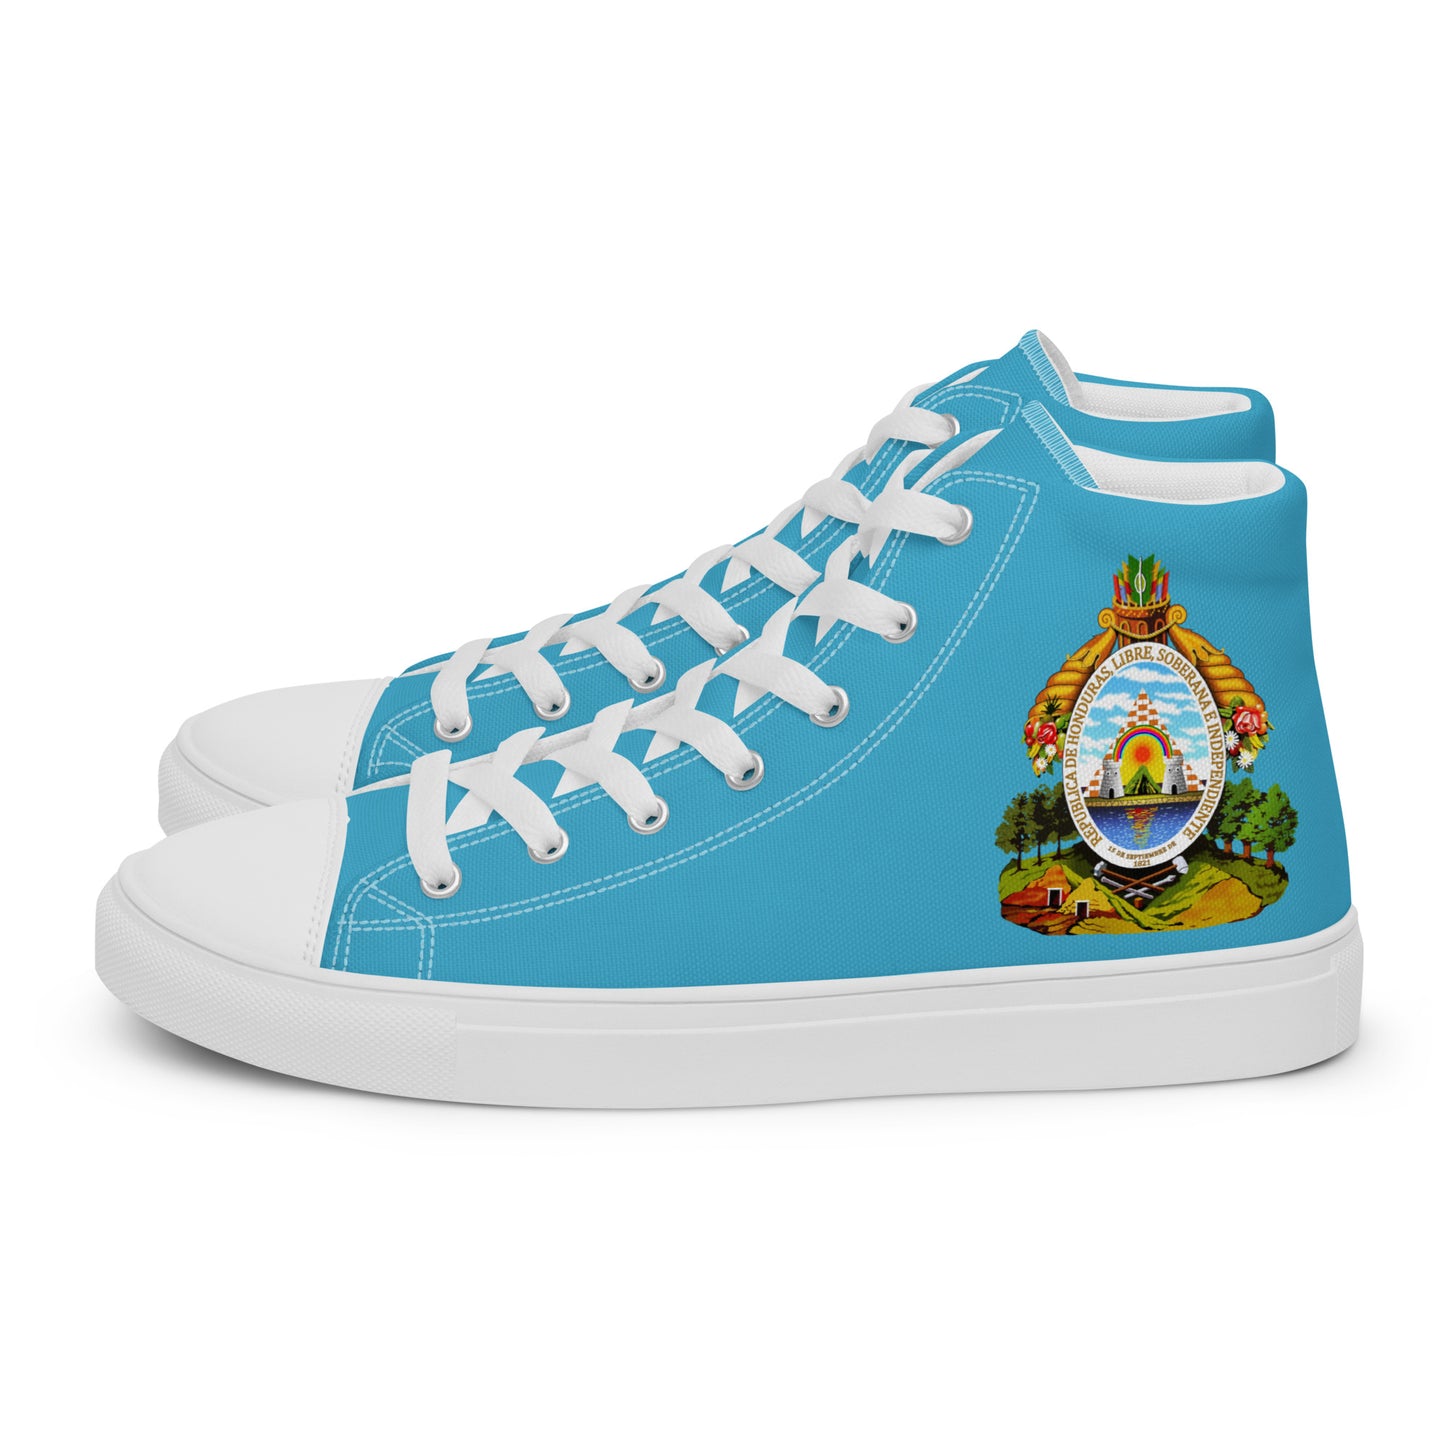 Honduras - Men - Sky - High top shoes